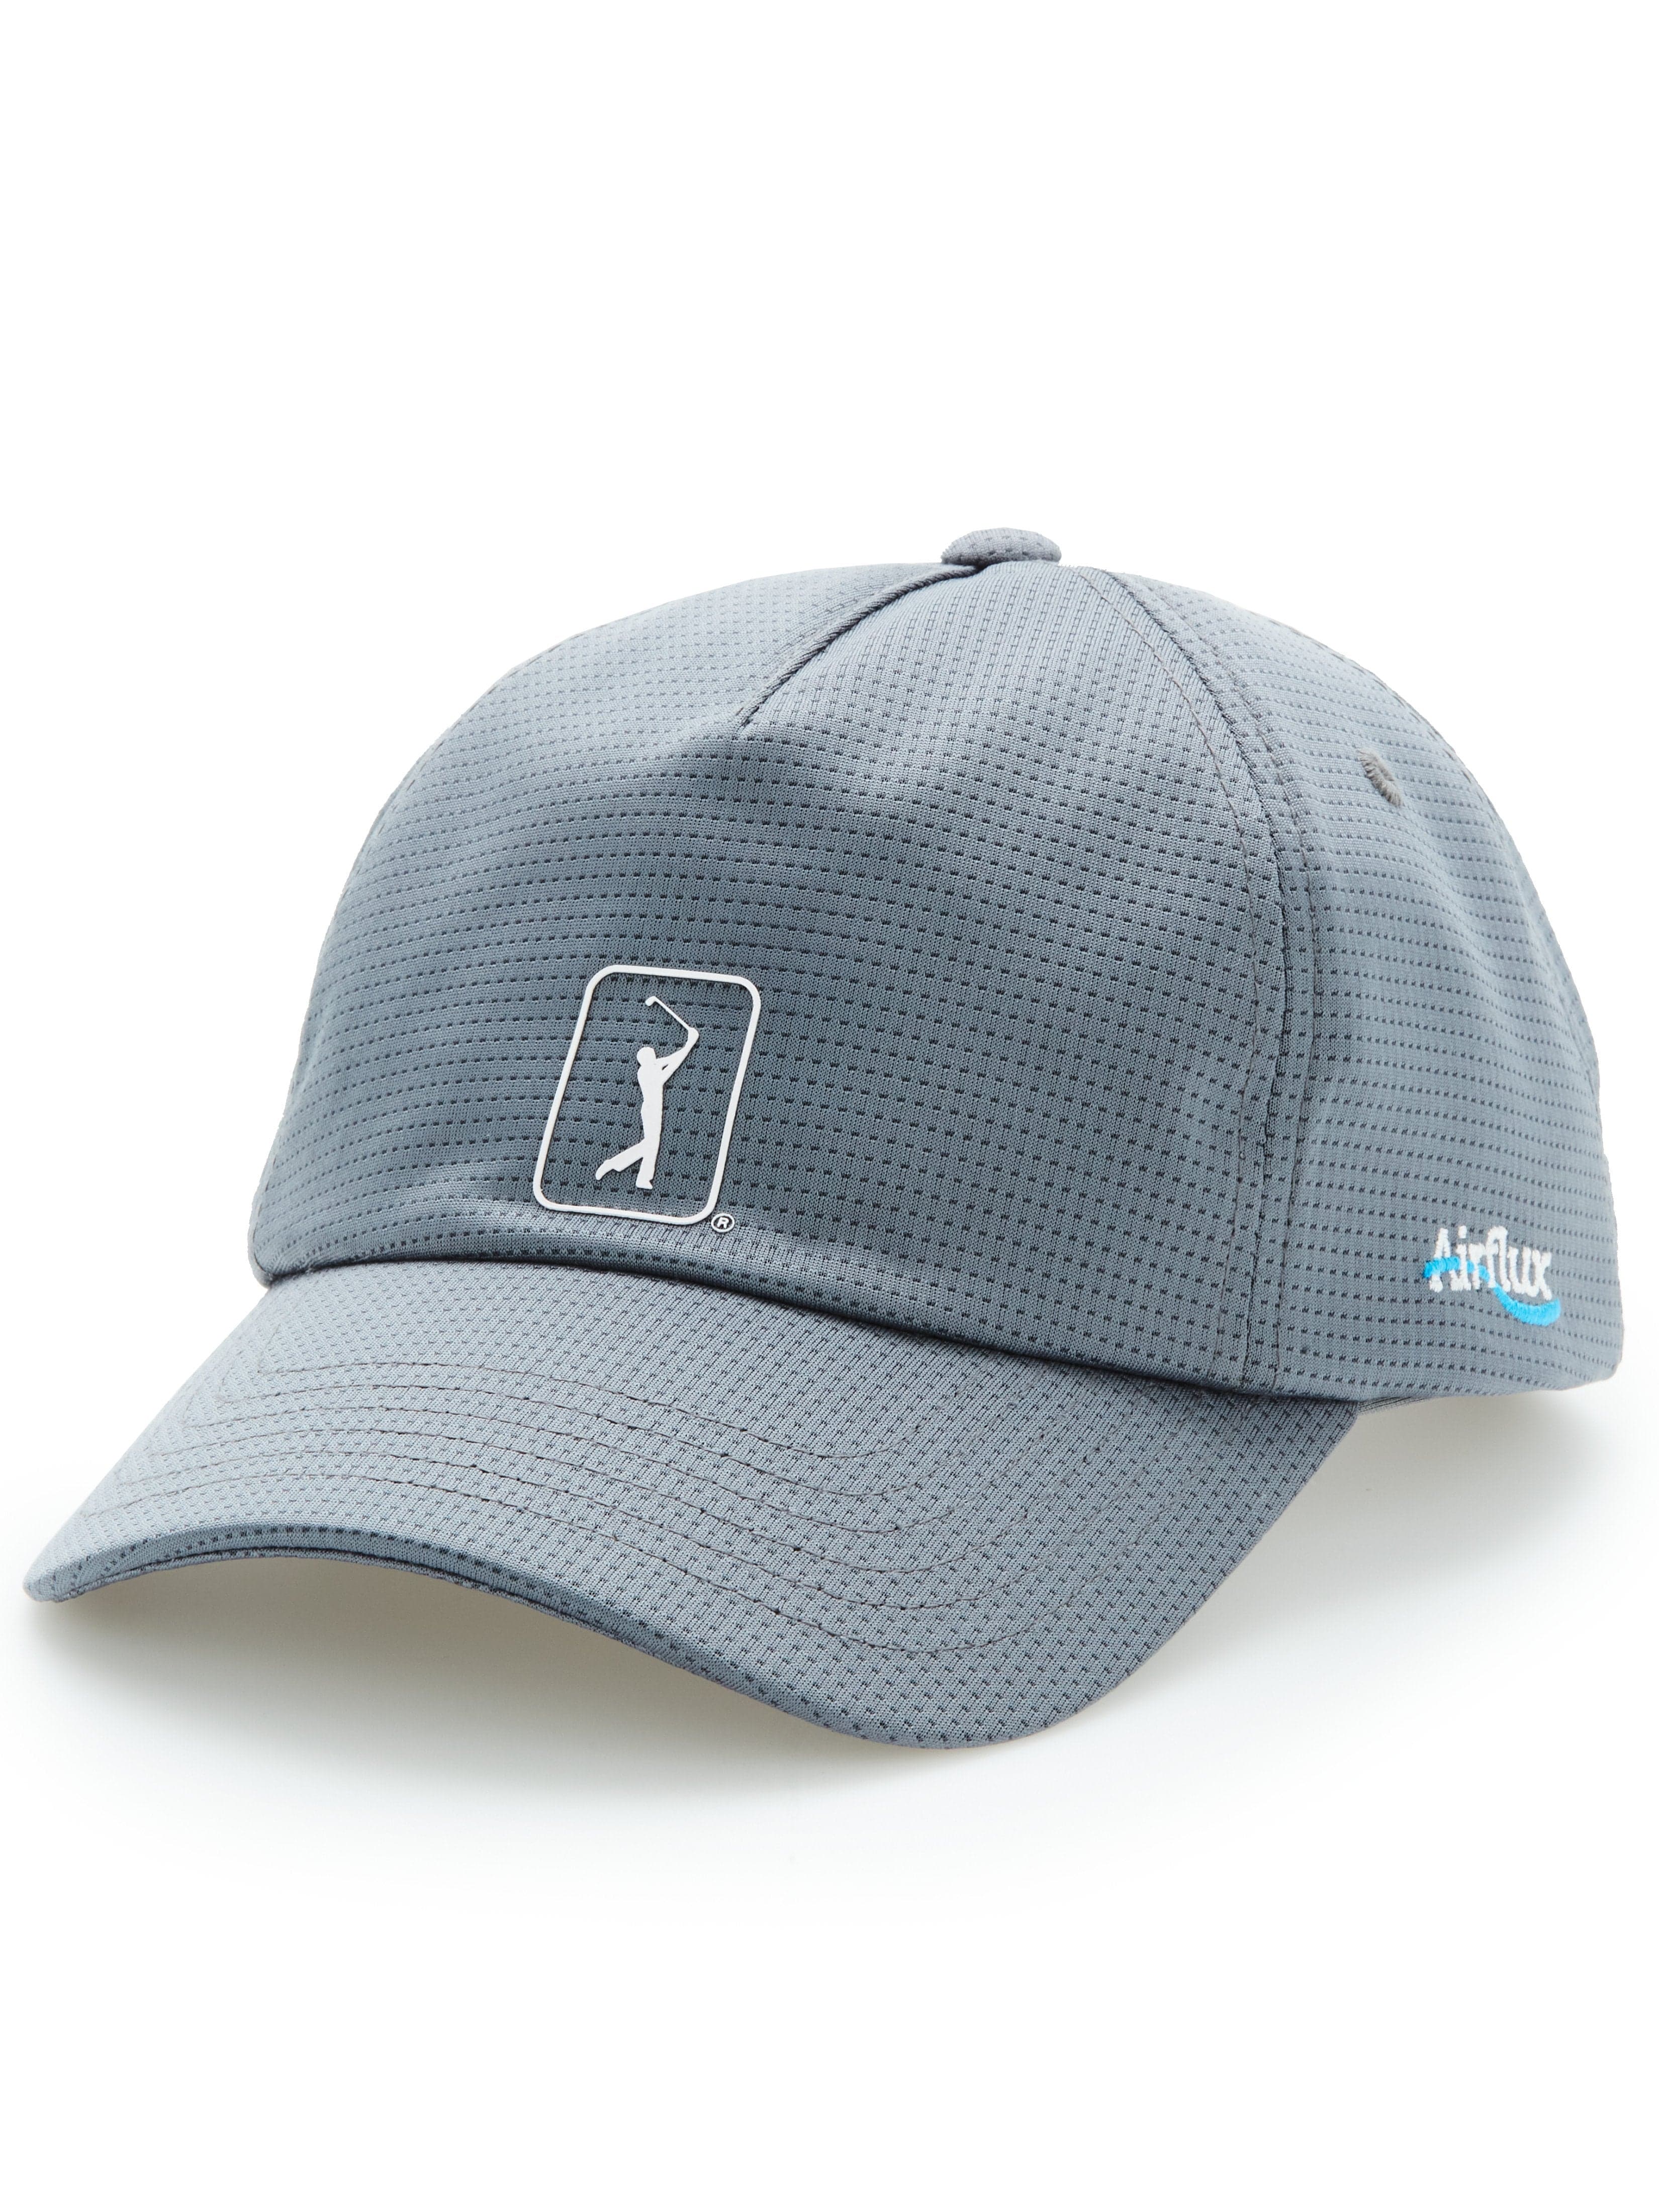 Puma Men's Tech P Snapback Golf Hat, Ash Grey